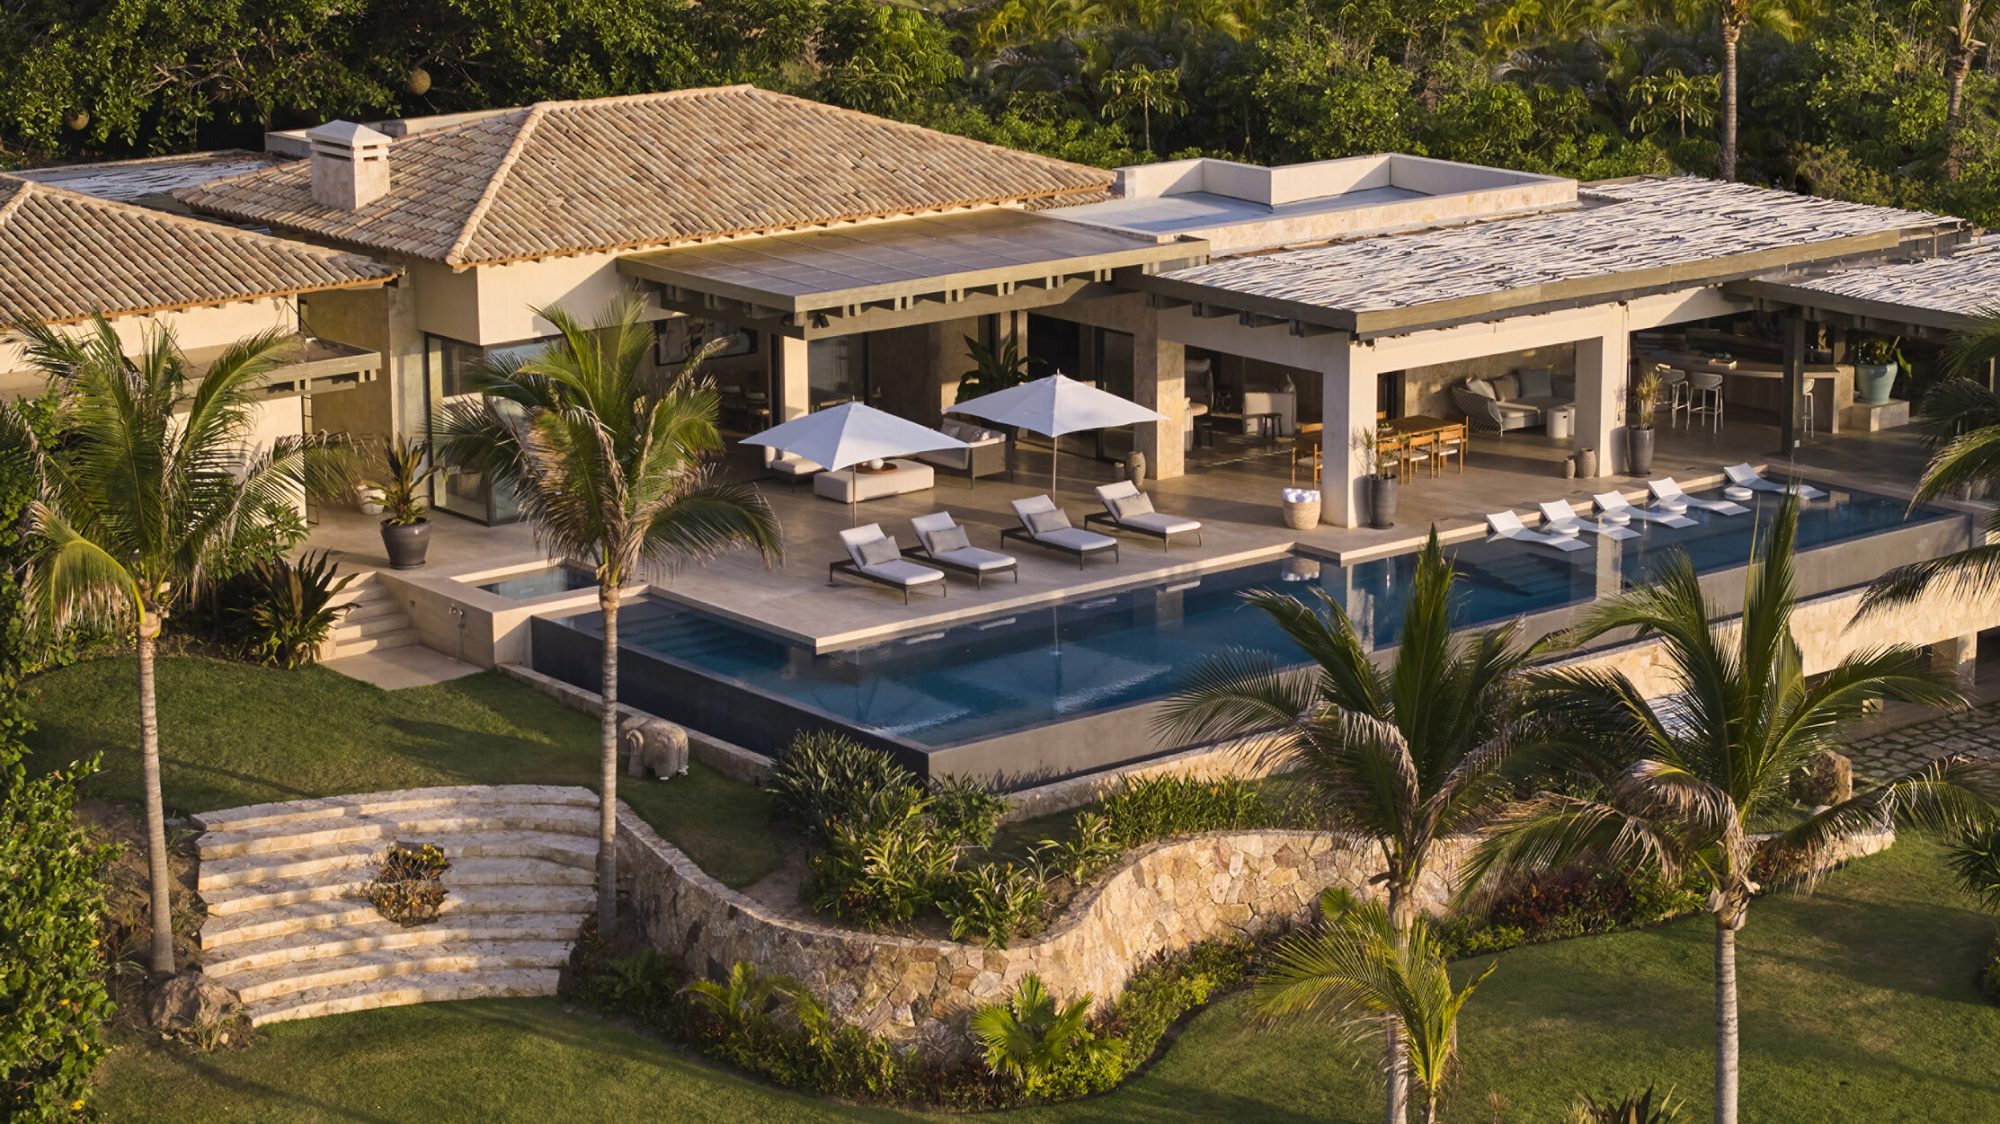 Casa Tesoro at Four Seasons Resort Punta Mita brings ultimate beachfront luxury